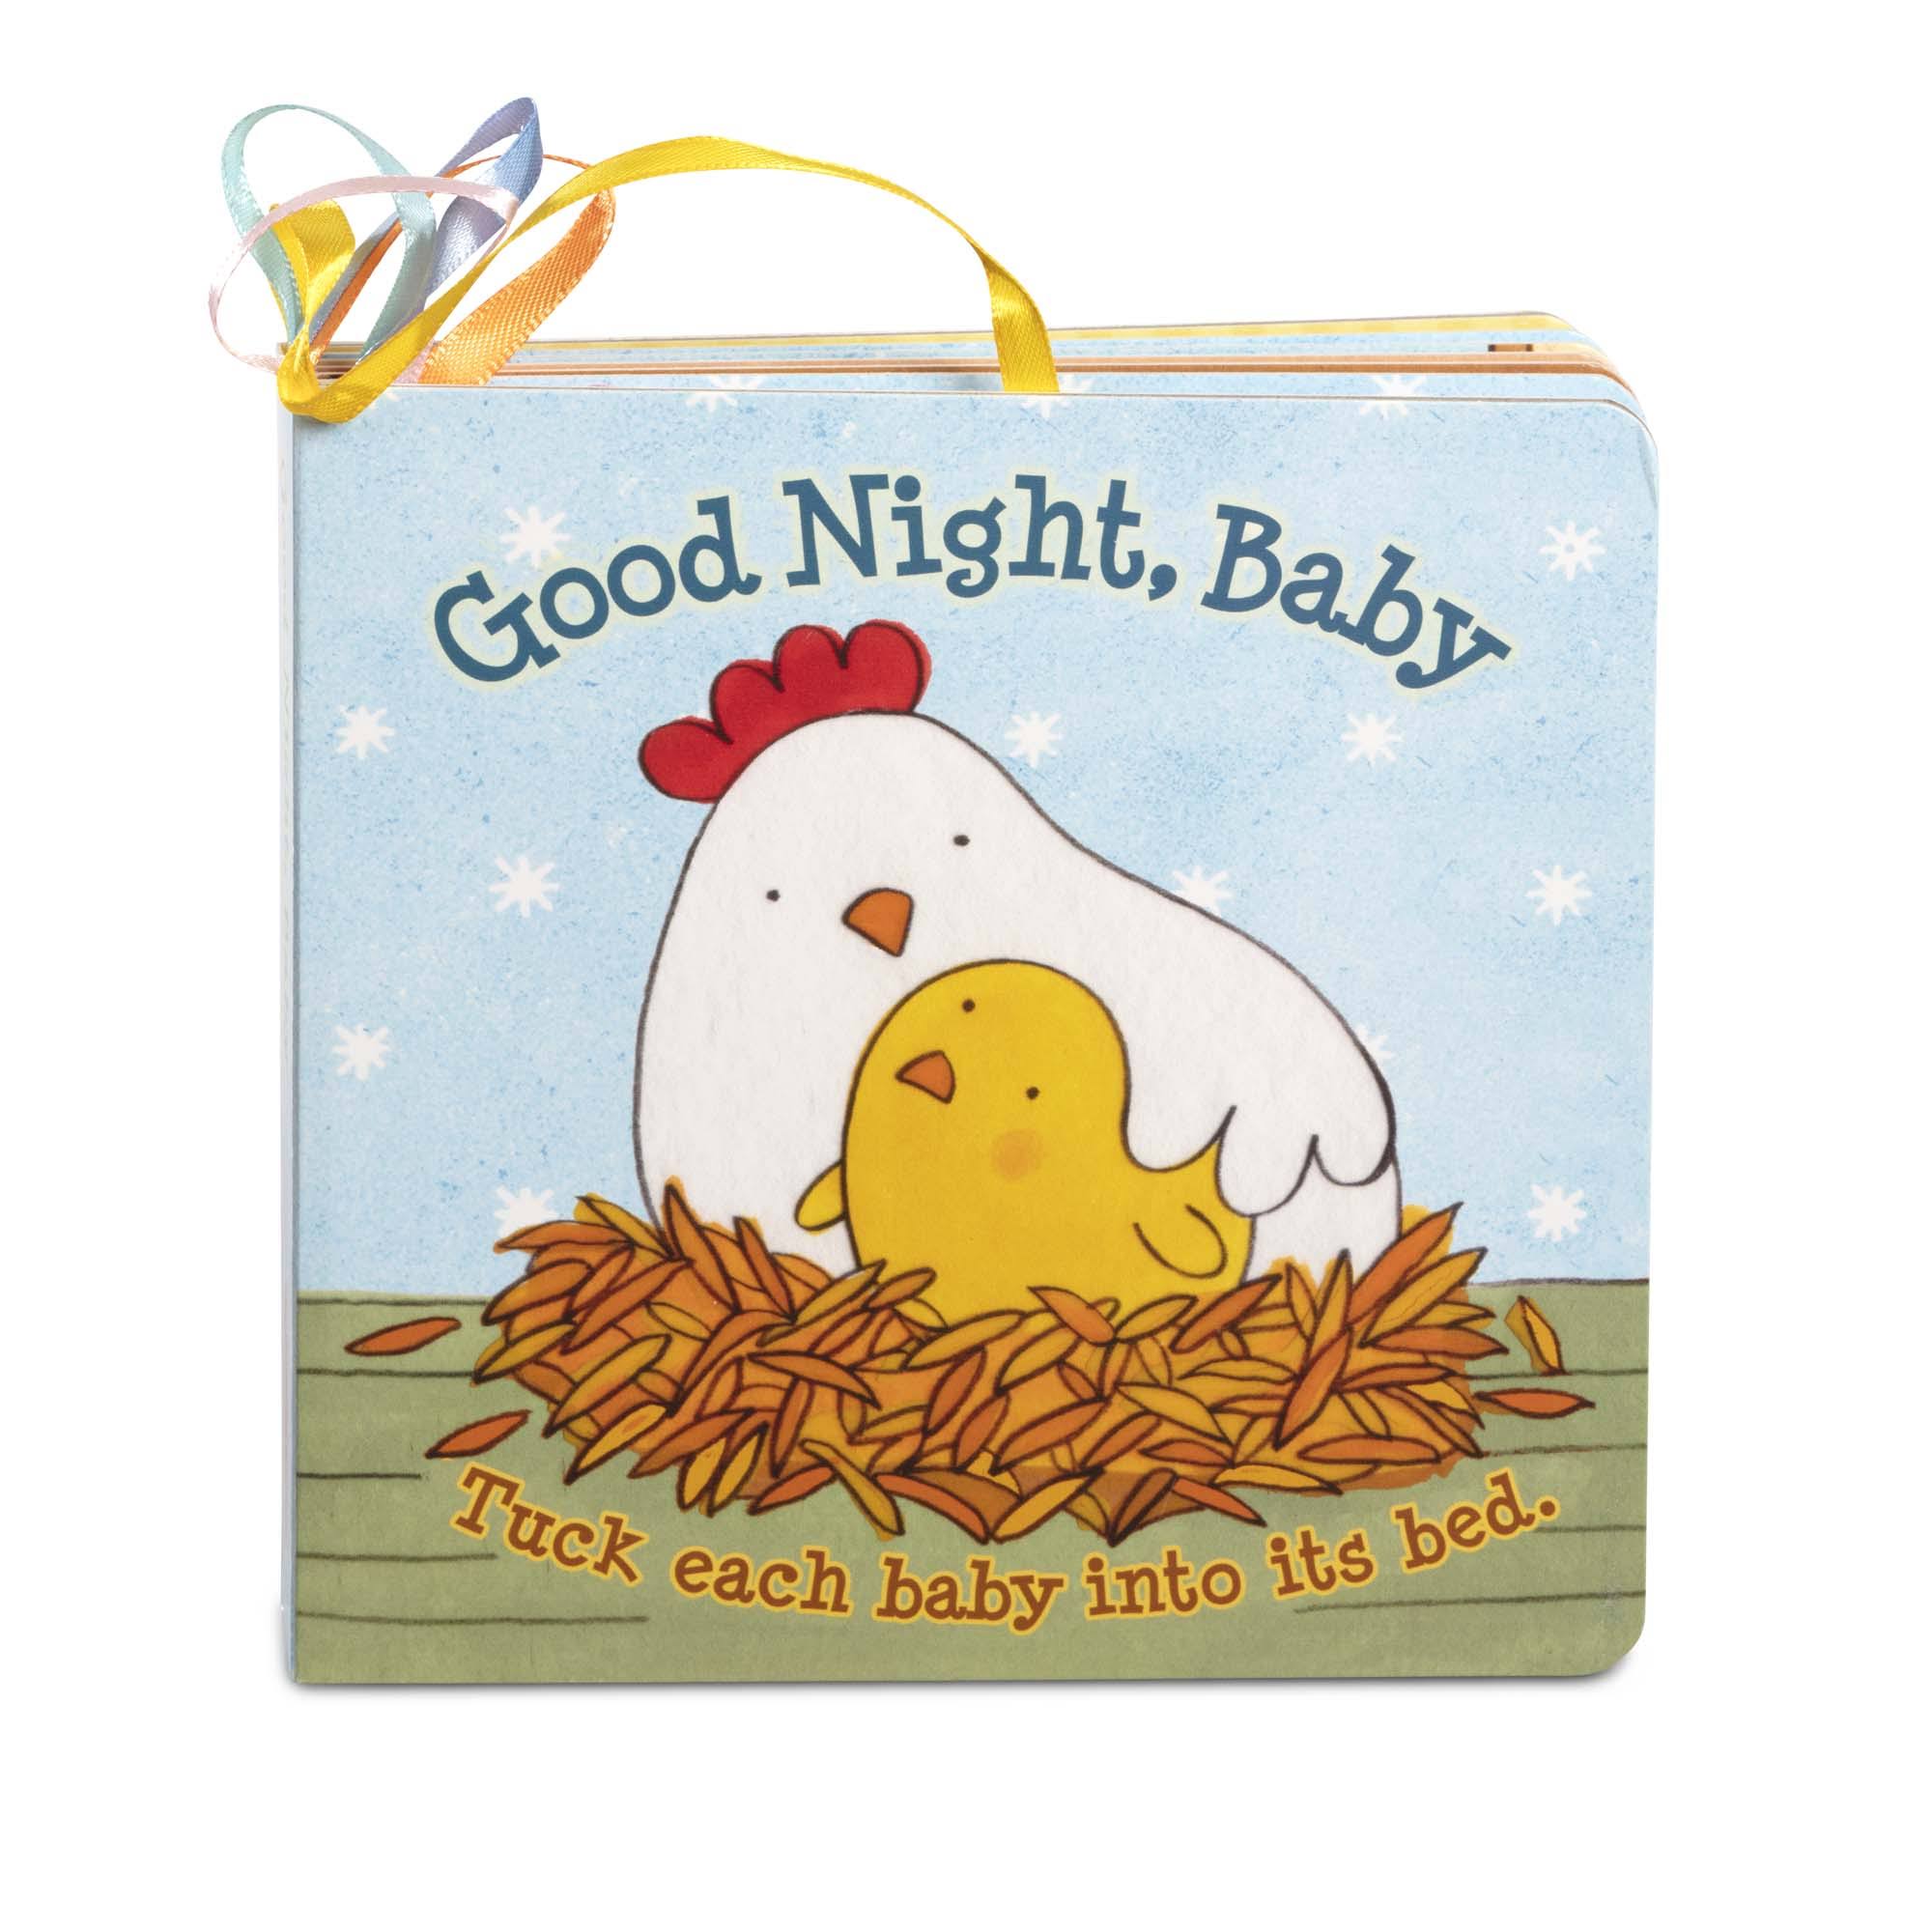 Goodnight, Baby (Board book)